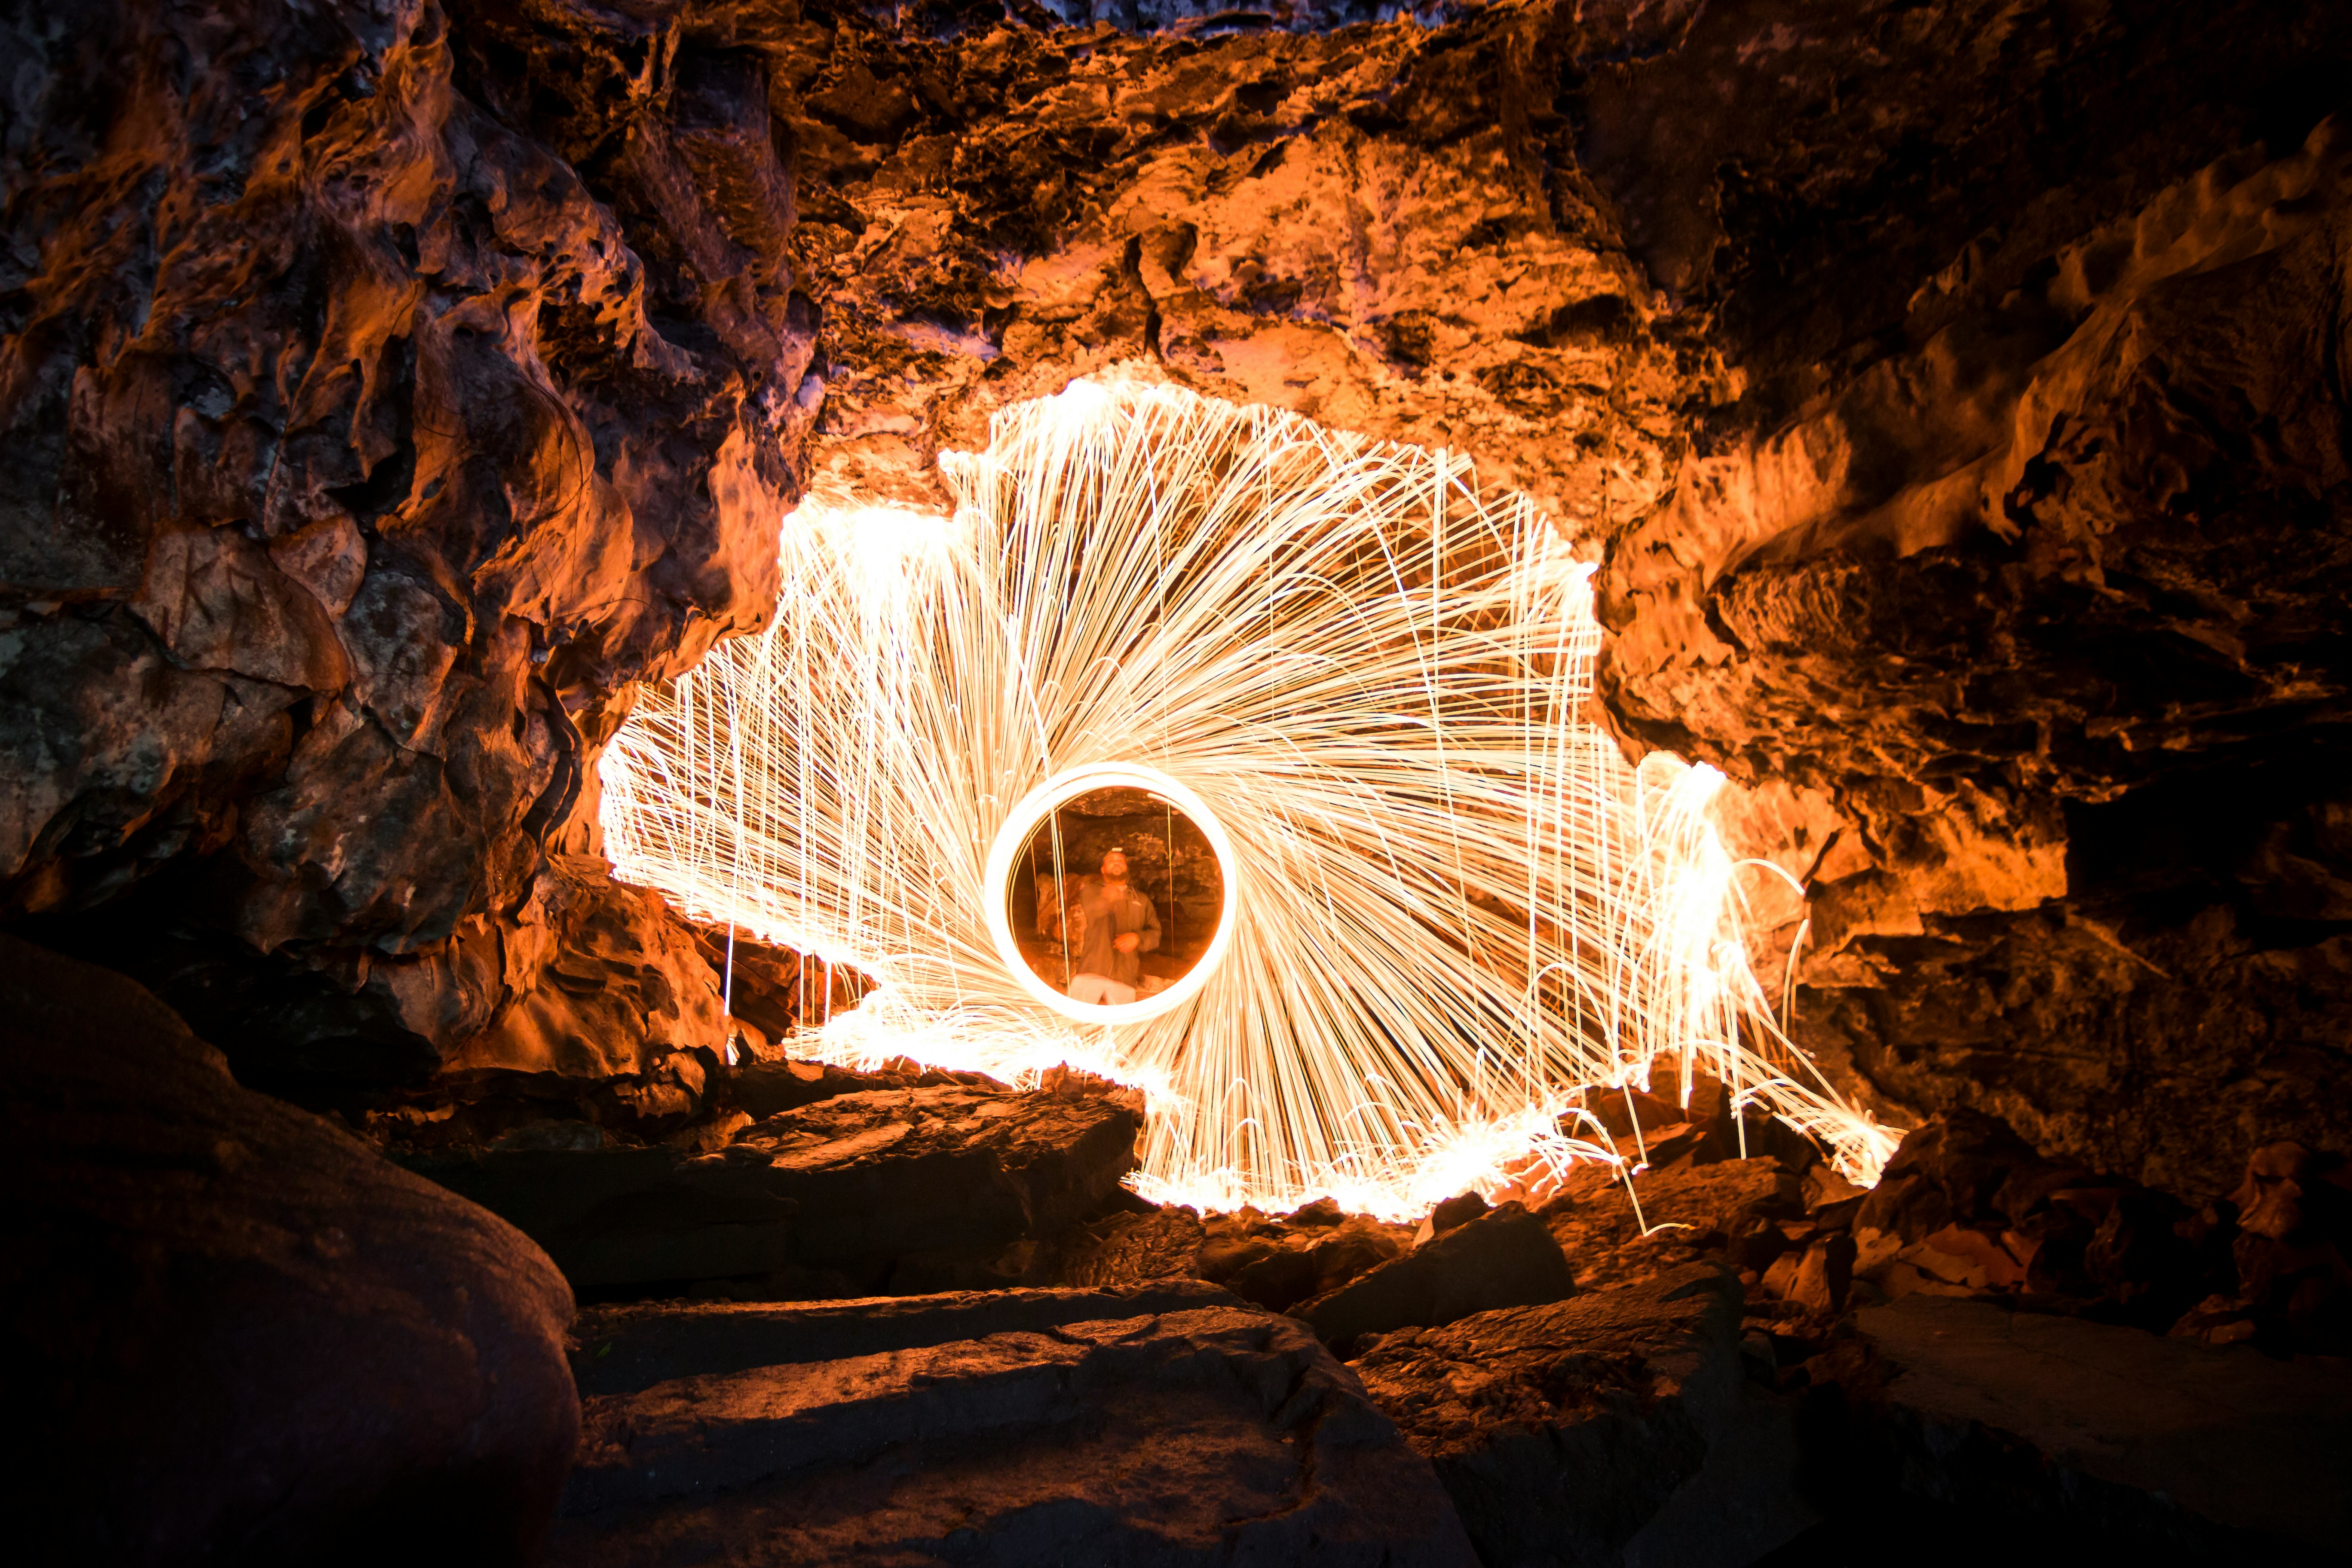 steel wool photography of fire dance